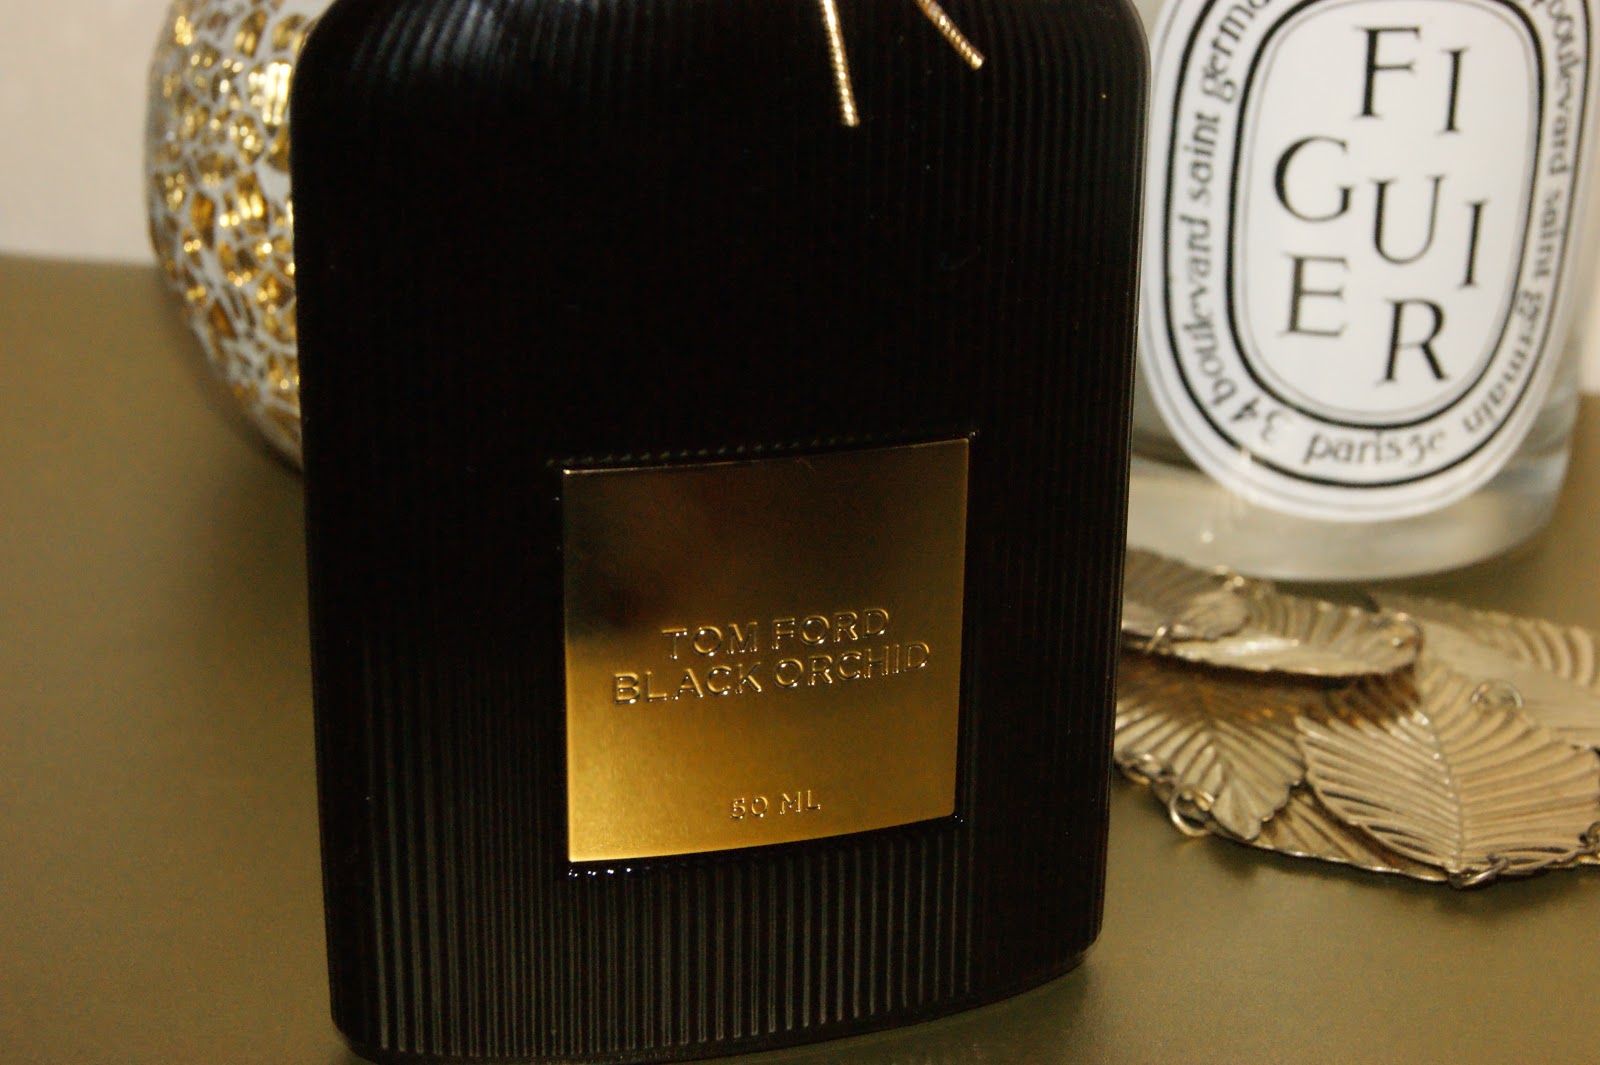 Tom Ford Black Orchid Eau de Parfum - Review | The Sunday Girl